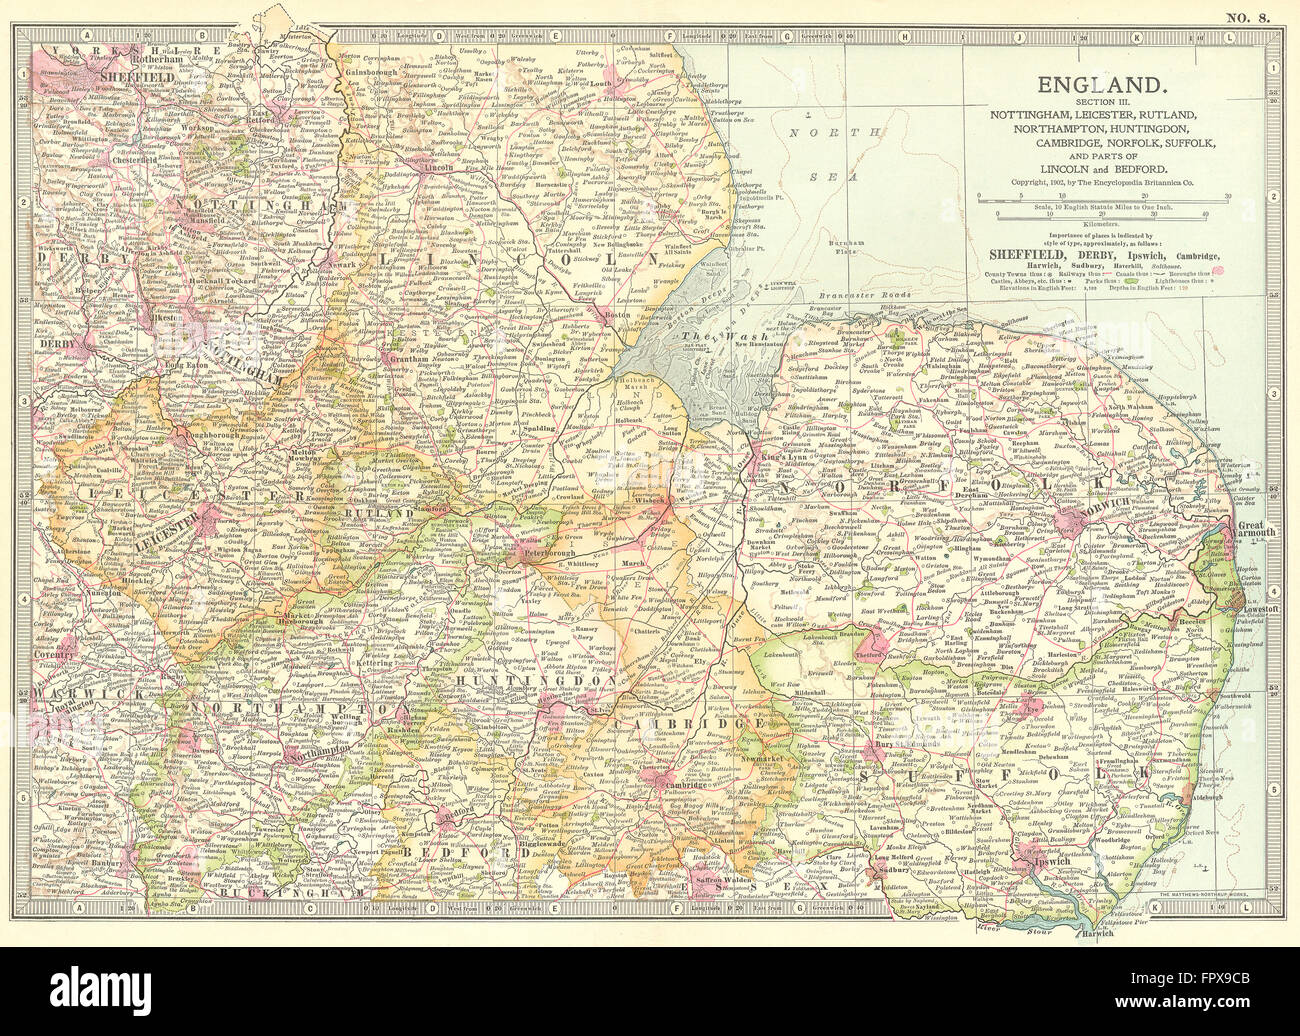 EAST MIDLANDS ANGLIA: Notts Leics Hunts Cambs, 1903 antique map Stock Photo